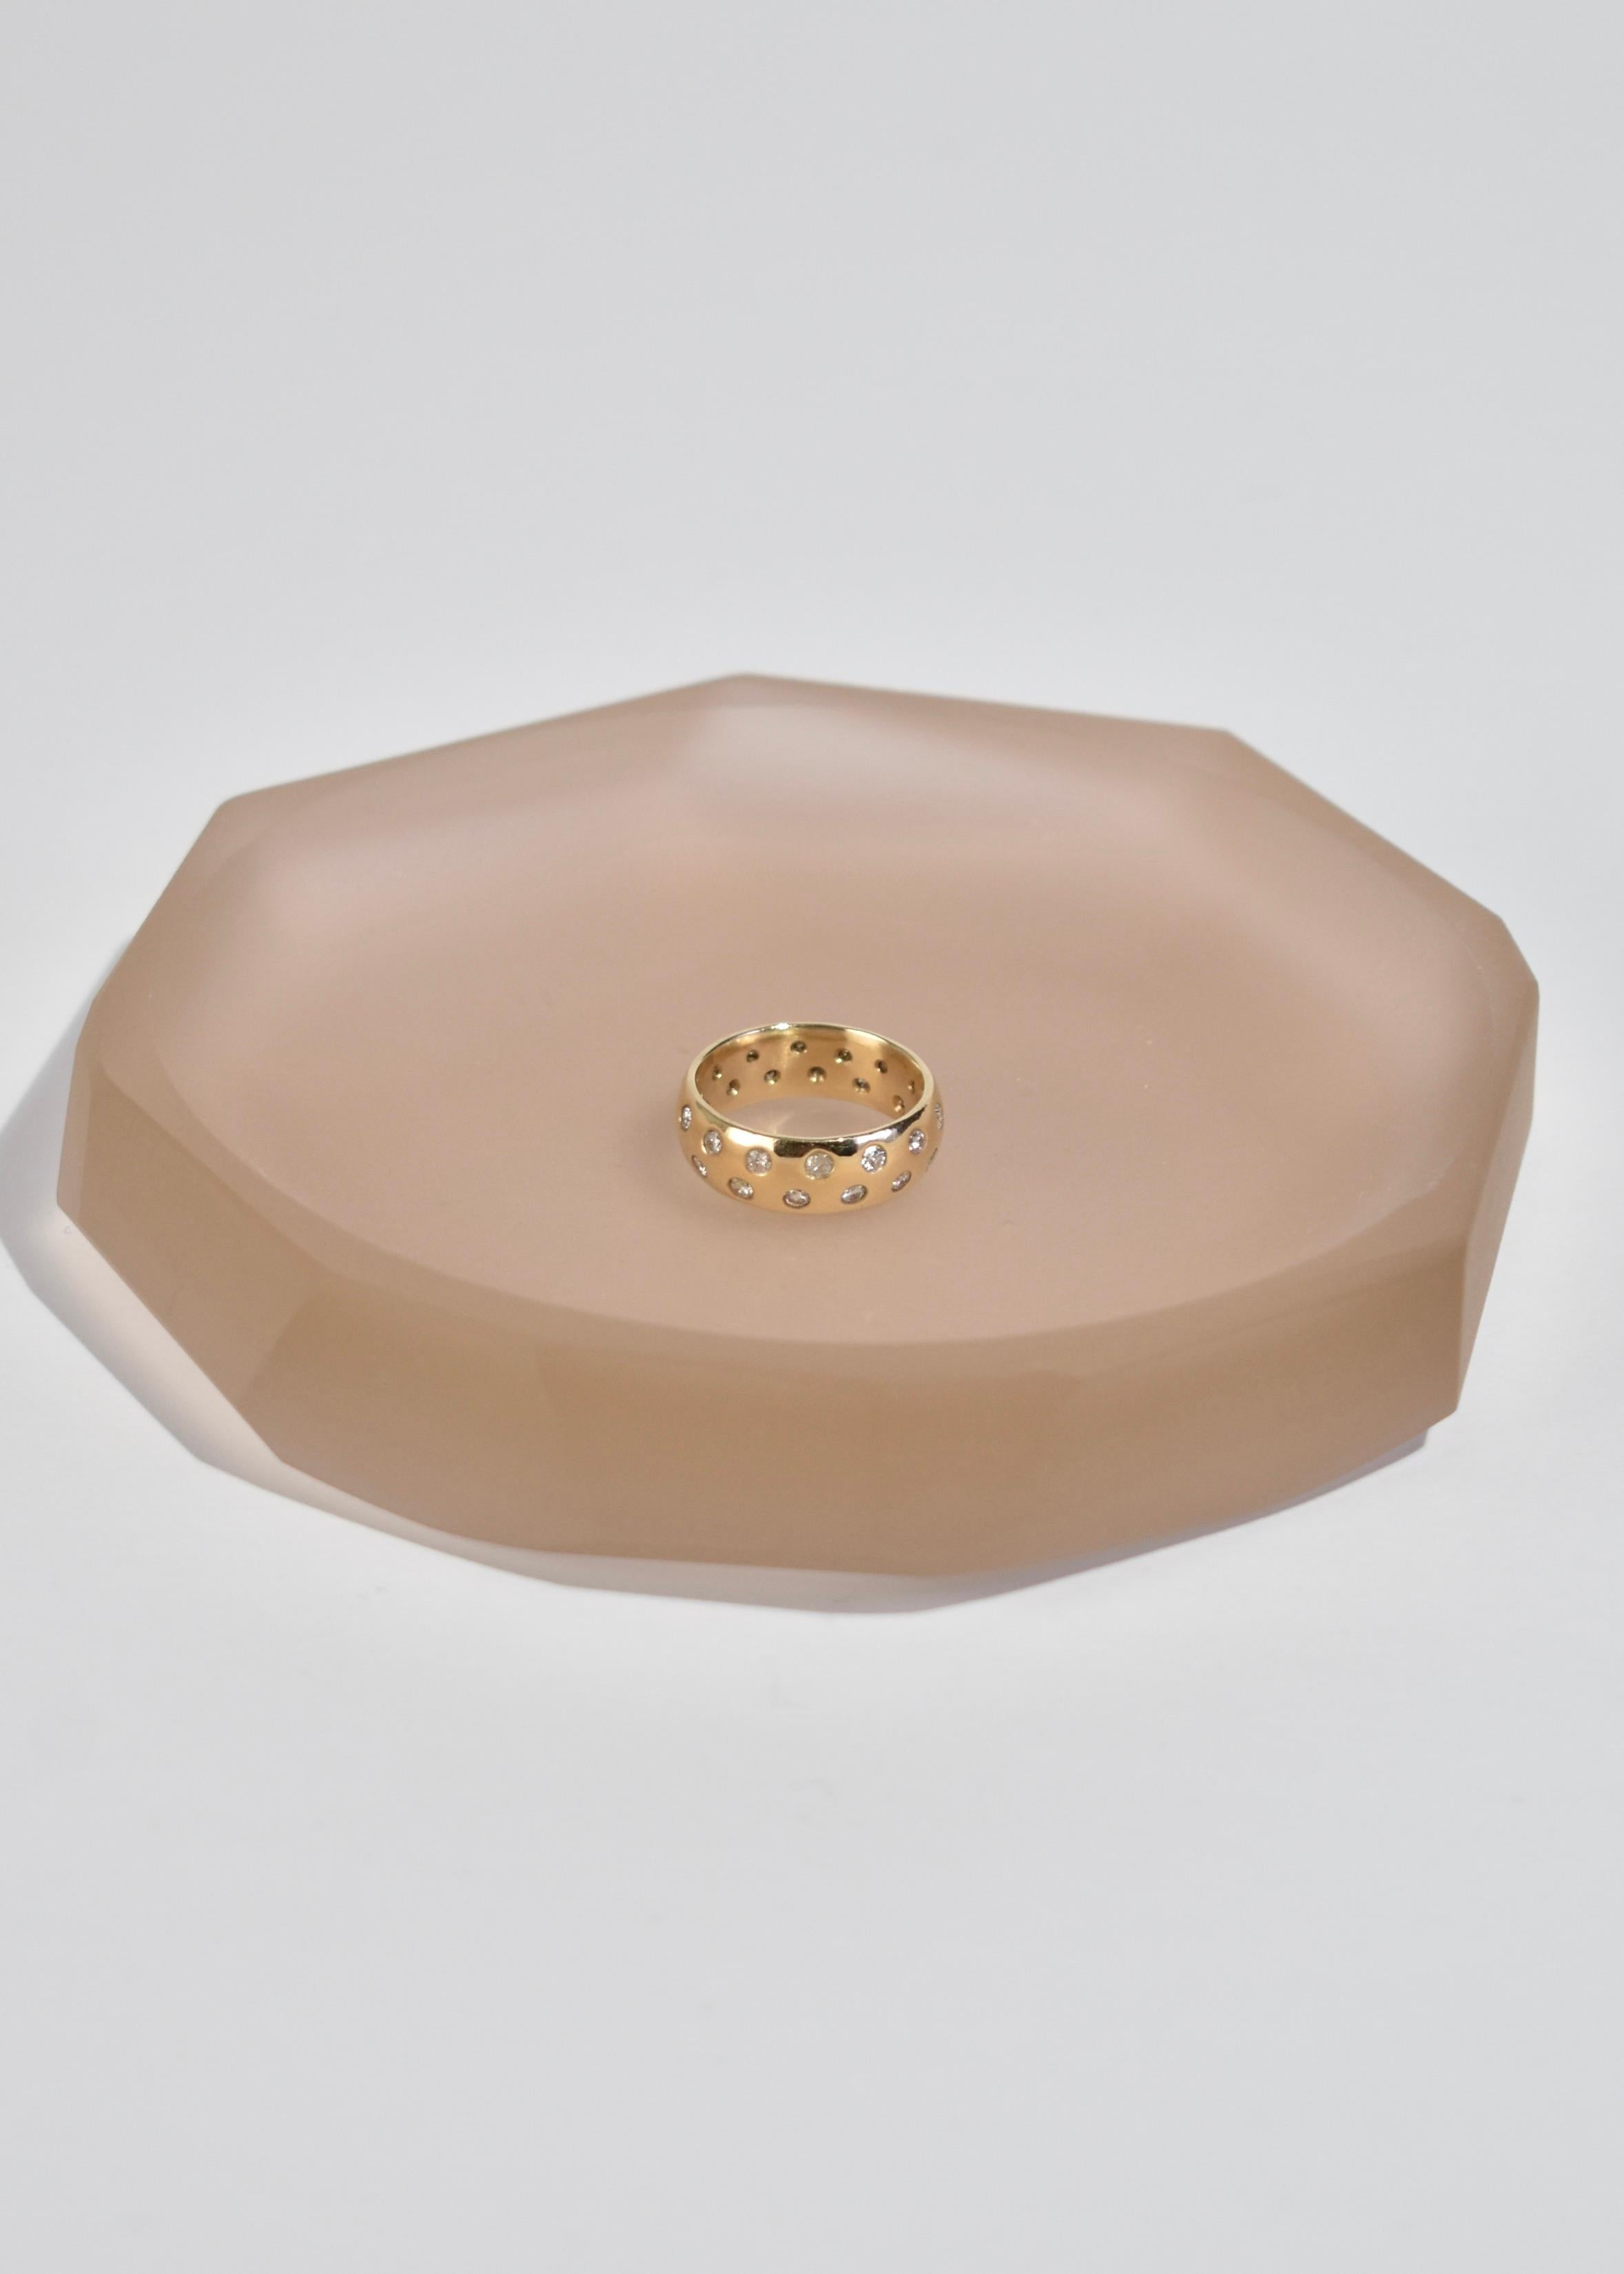 Women's or Men's Gold Diamond Band Ring